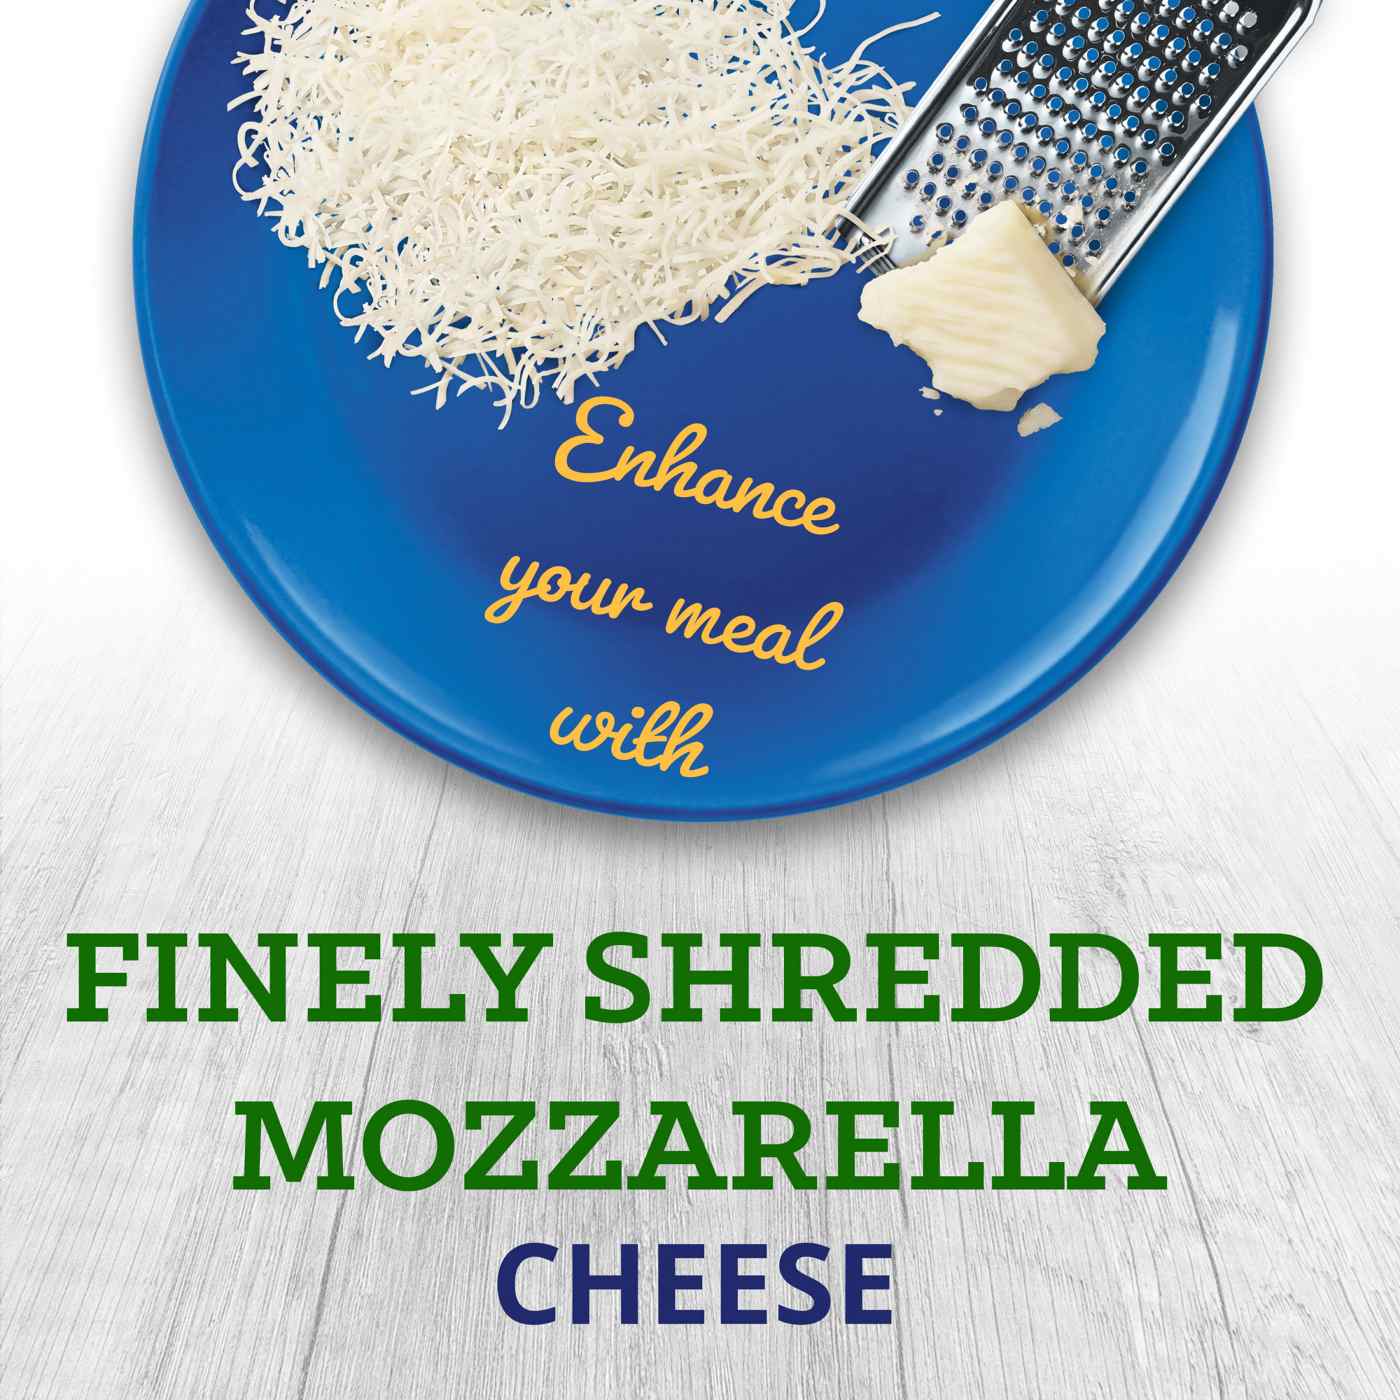 Kraft Low Moisture Part-Skim Mozzarella Finely Shredded Cheese; image 3 of 4